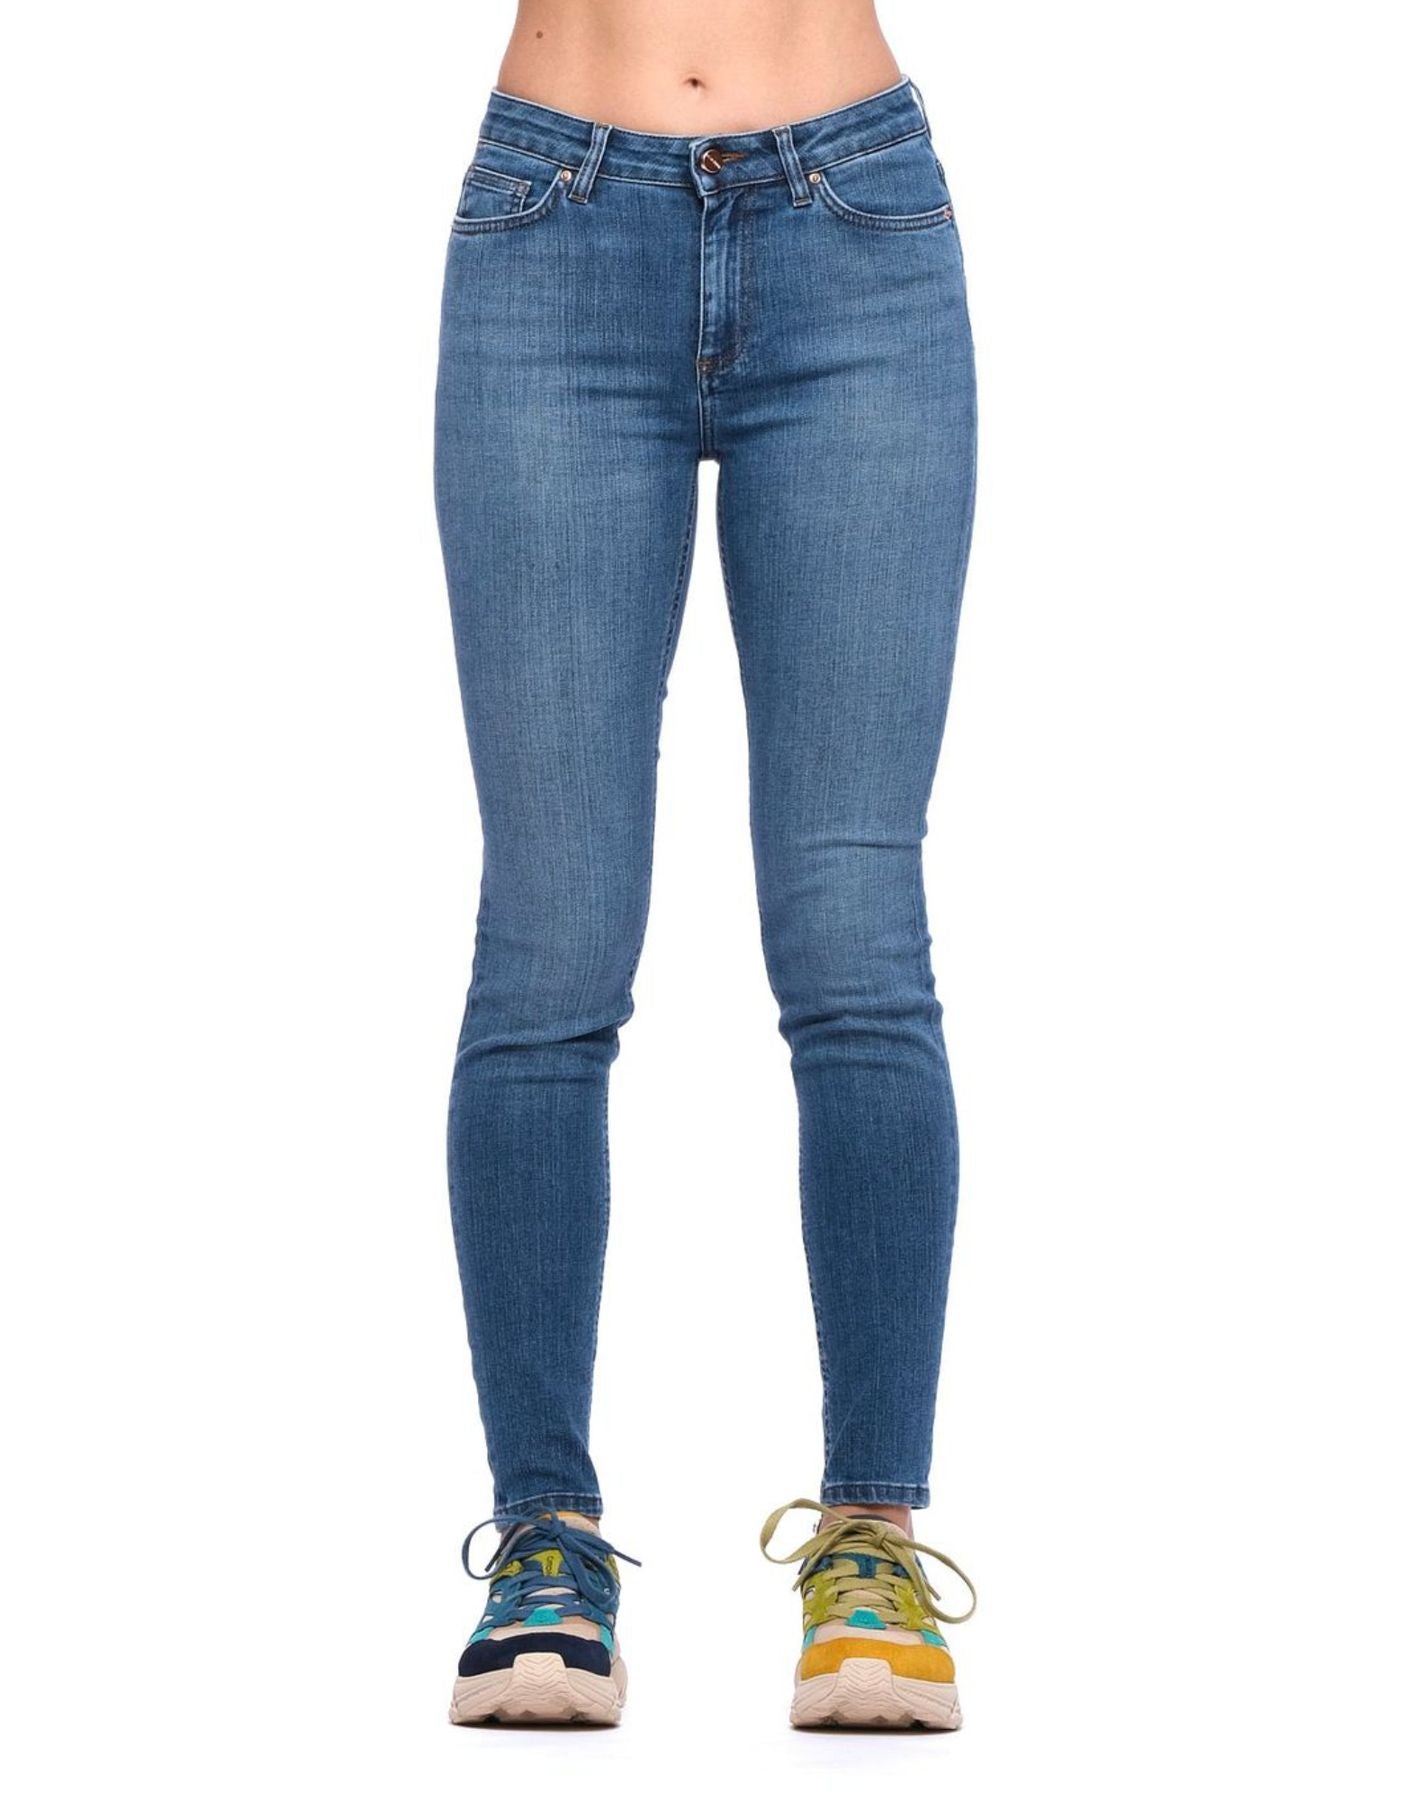 Jeans für Frauen DON THE FULLER CANNES DTF28B 902